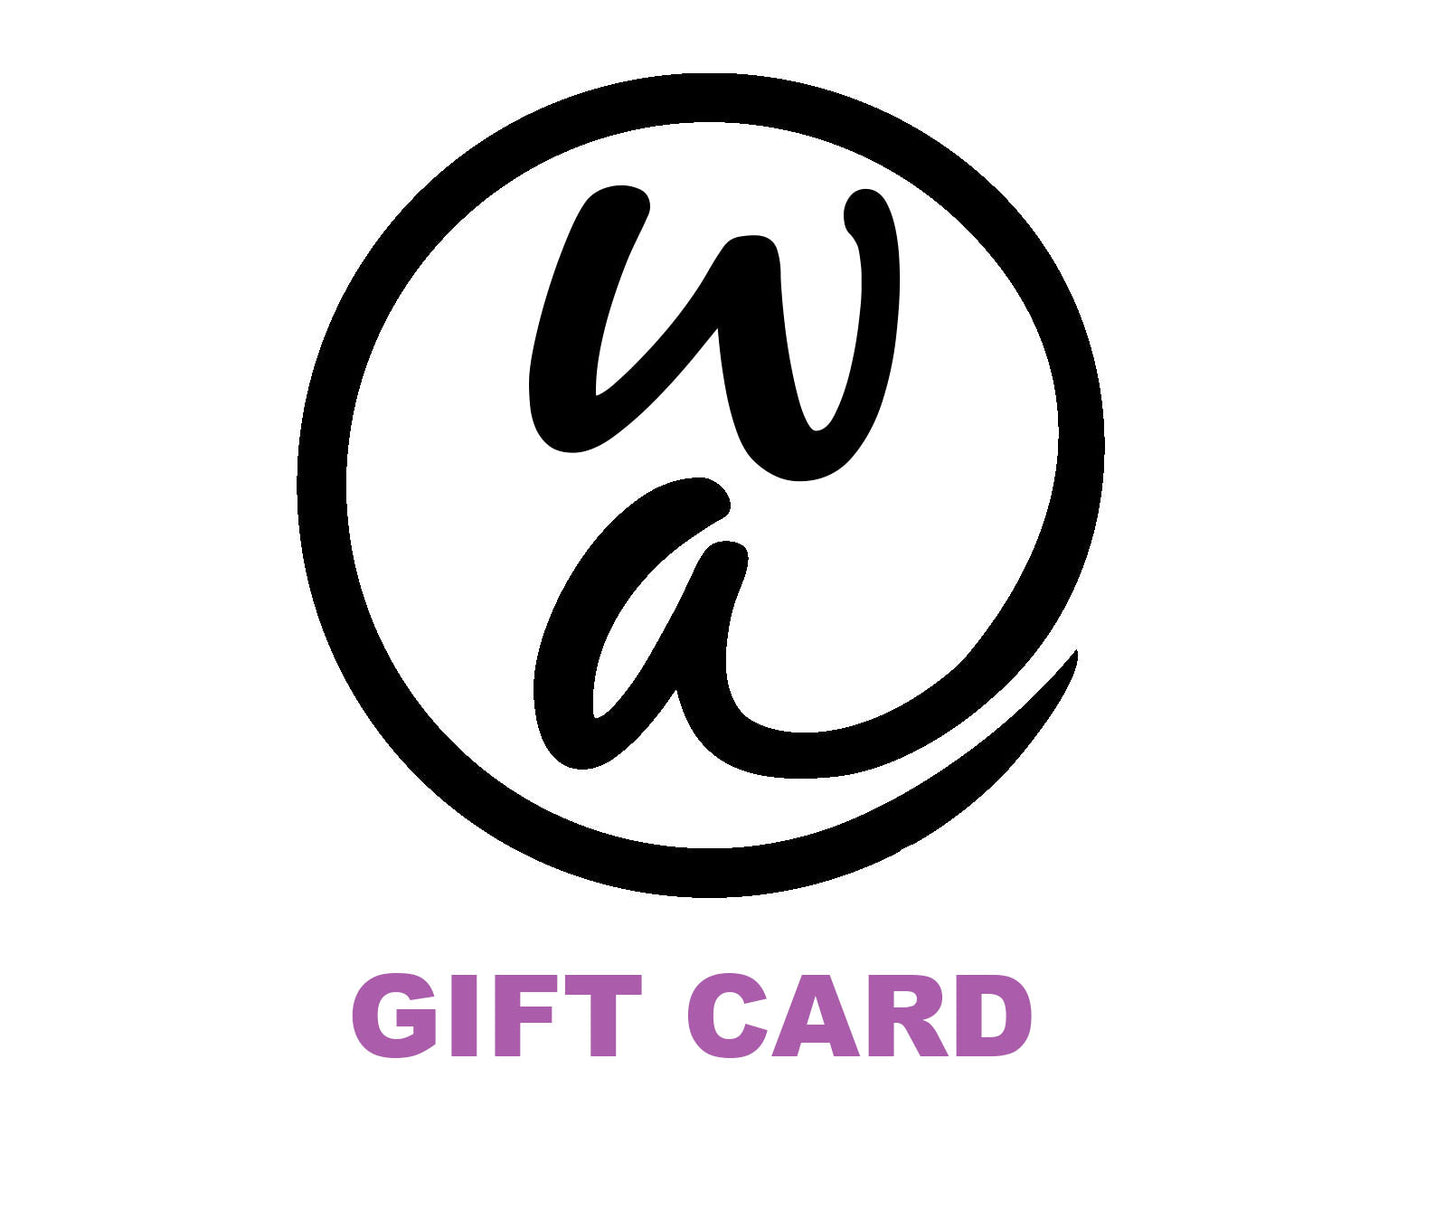 Gift Cards - $50.00 - Wonderful Addition